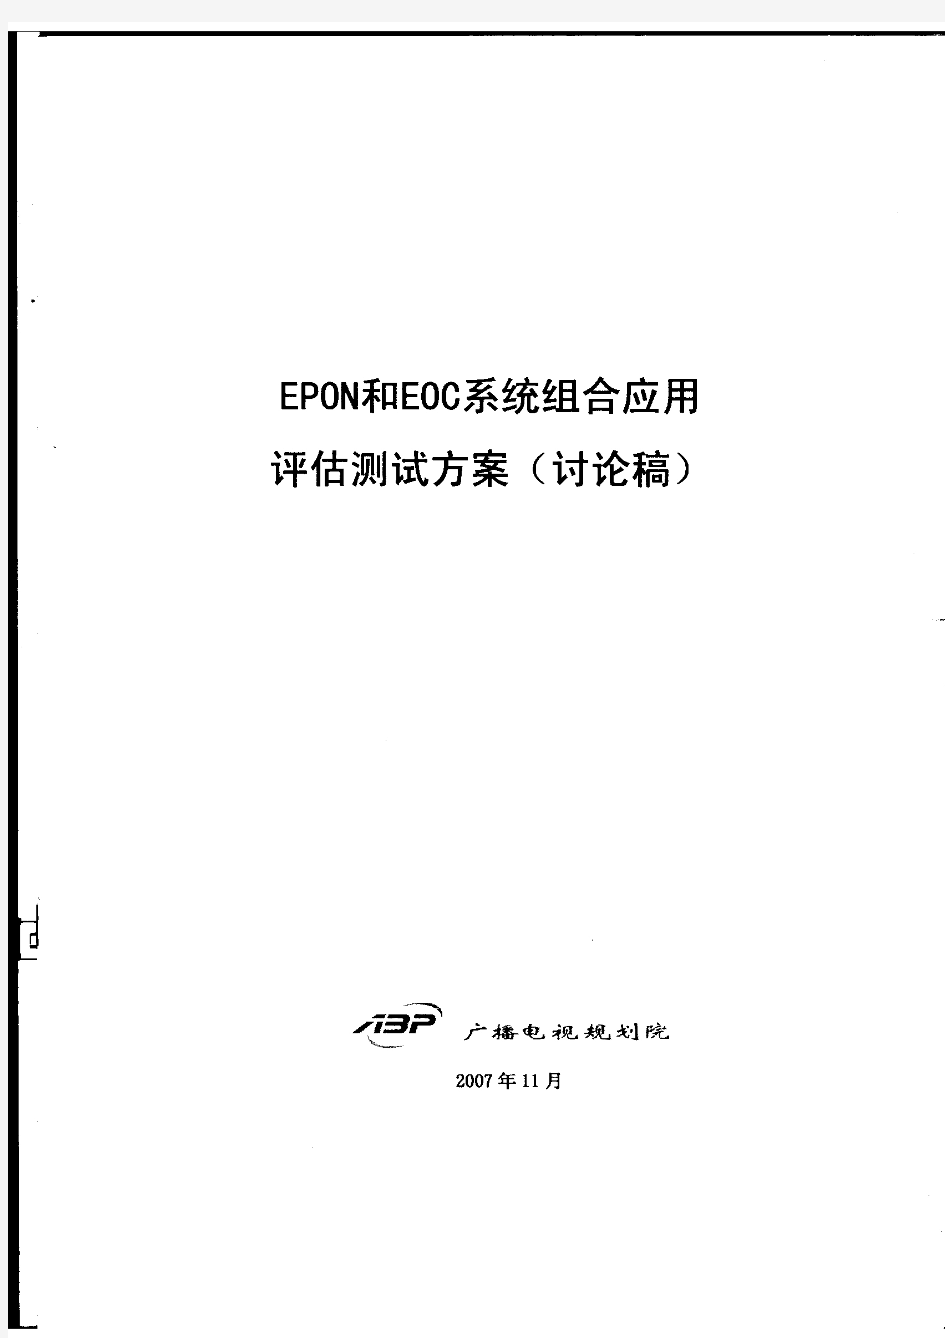 EPON和EOC系统组合应用评估测试方法